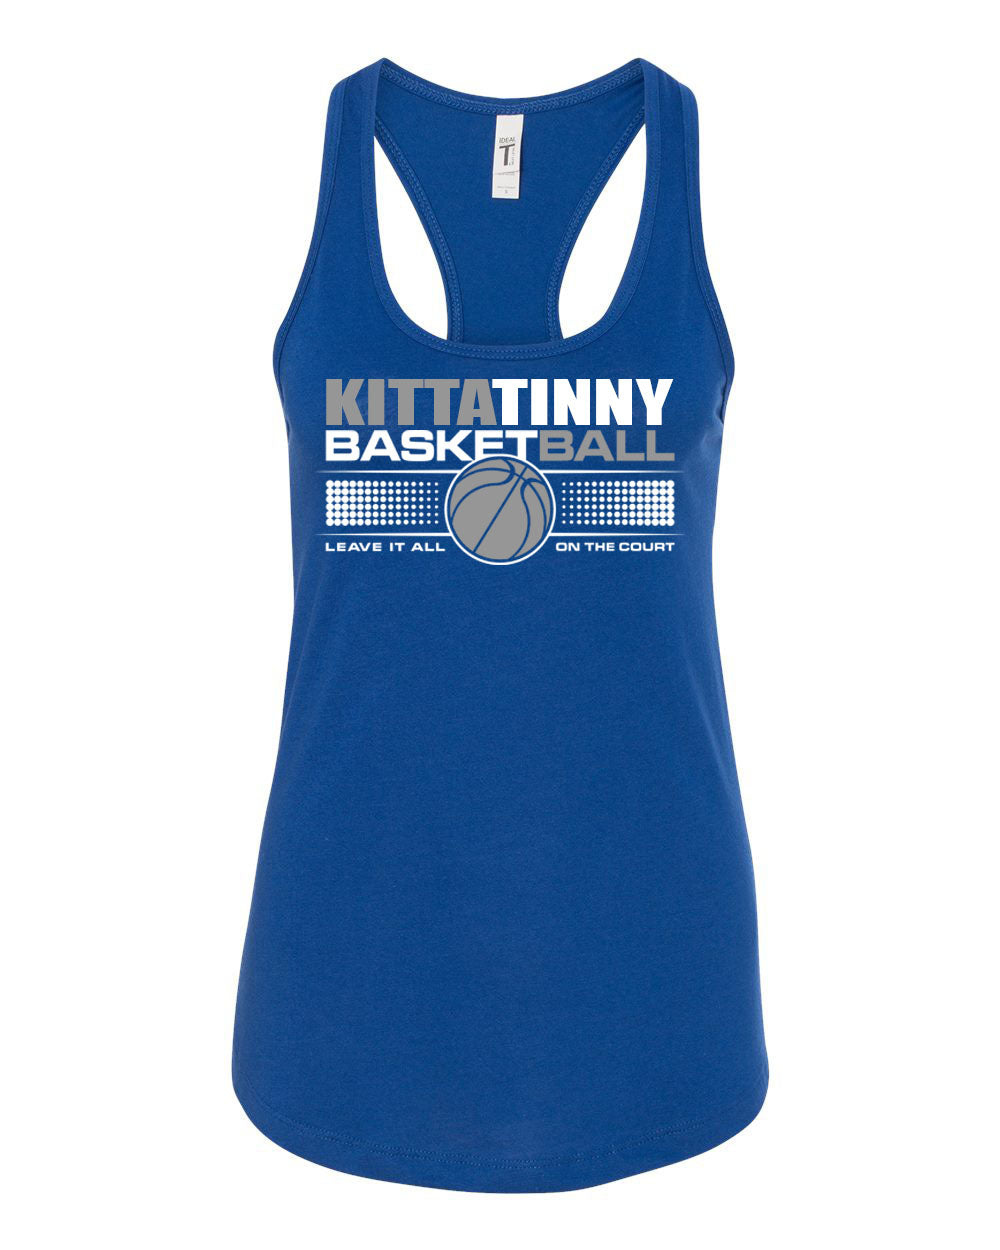 Kittatinny Basketball Design 2 Tank Top